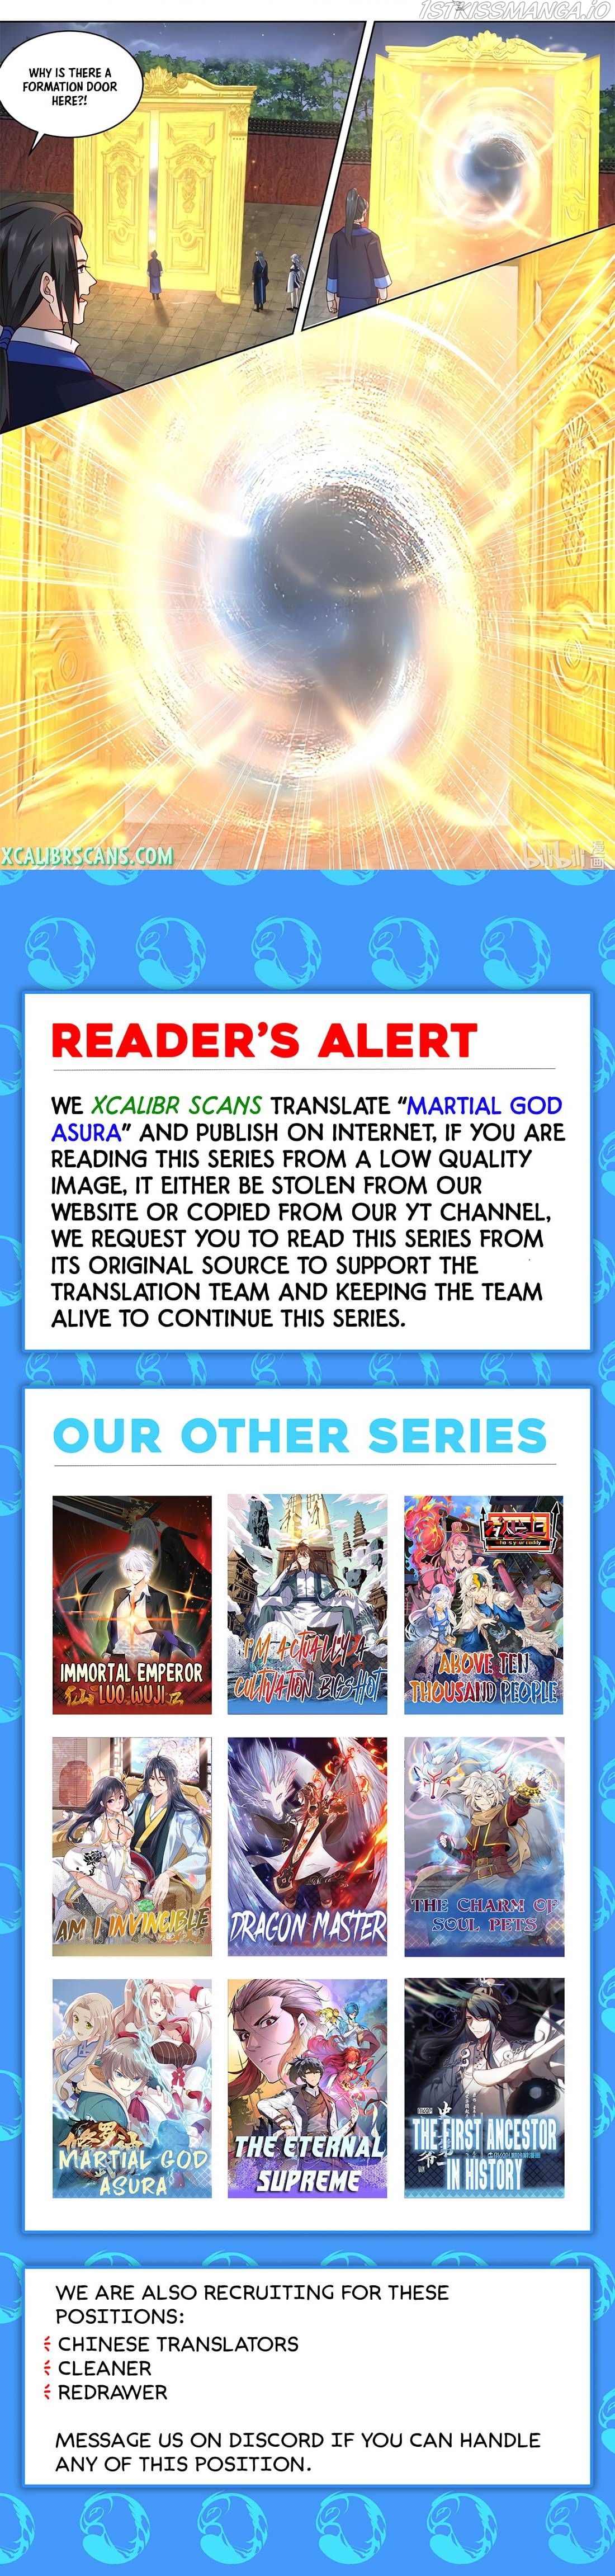 Martial God Asura Chapter 500 - Page 9